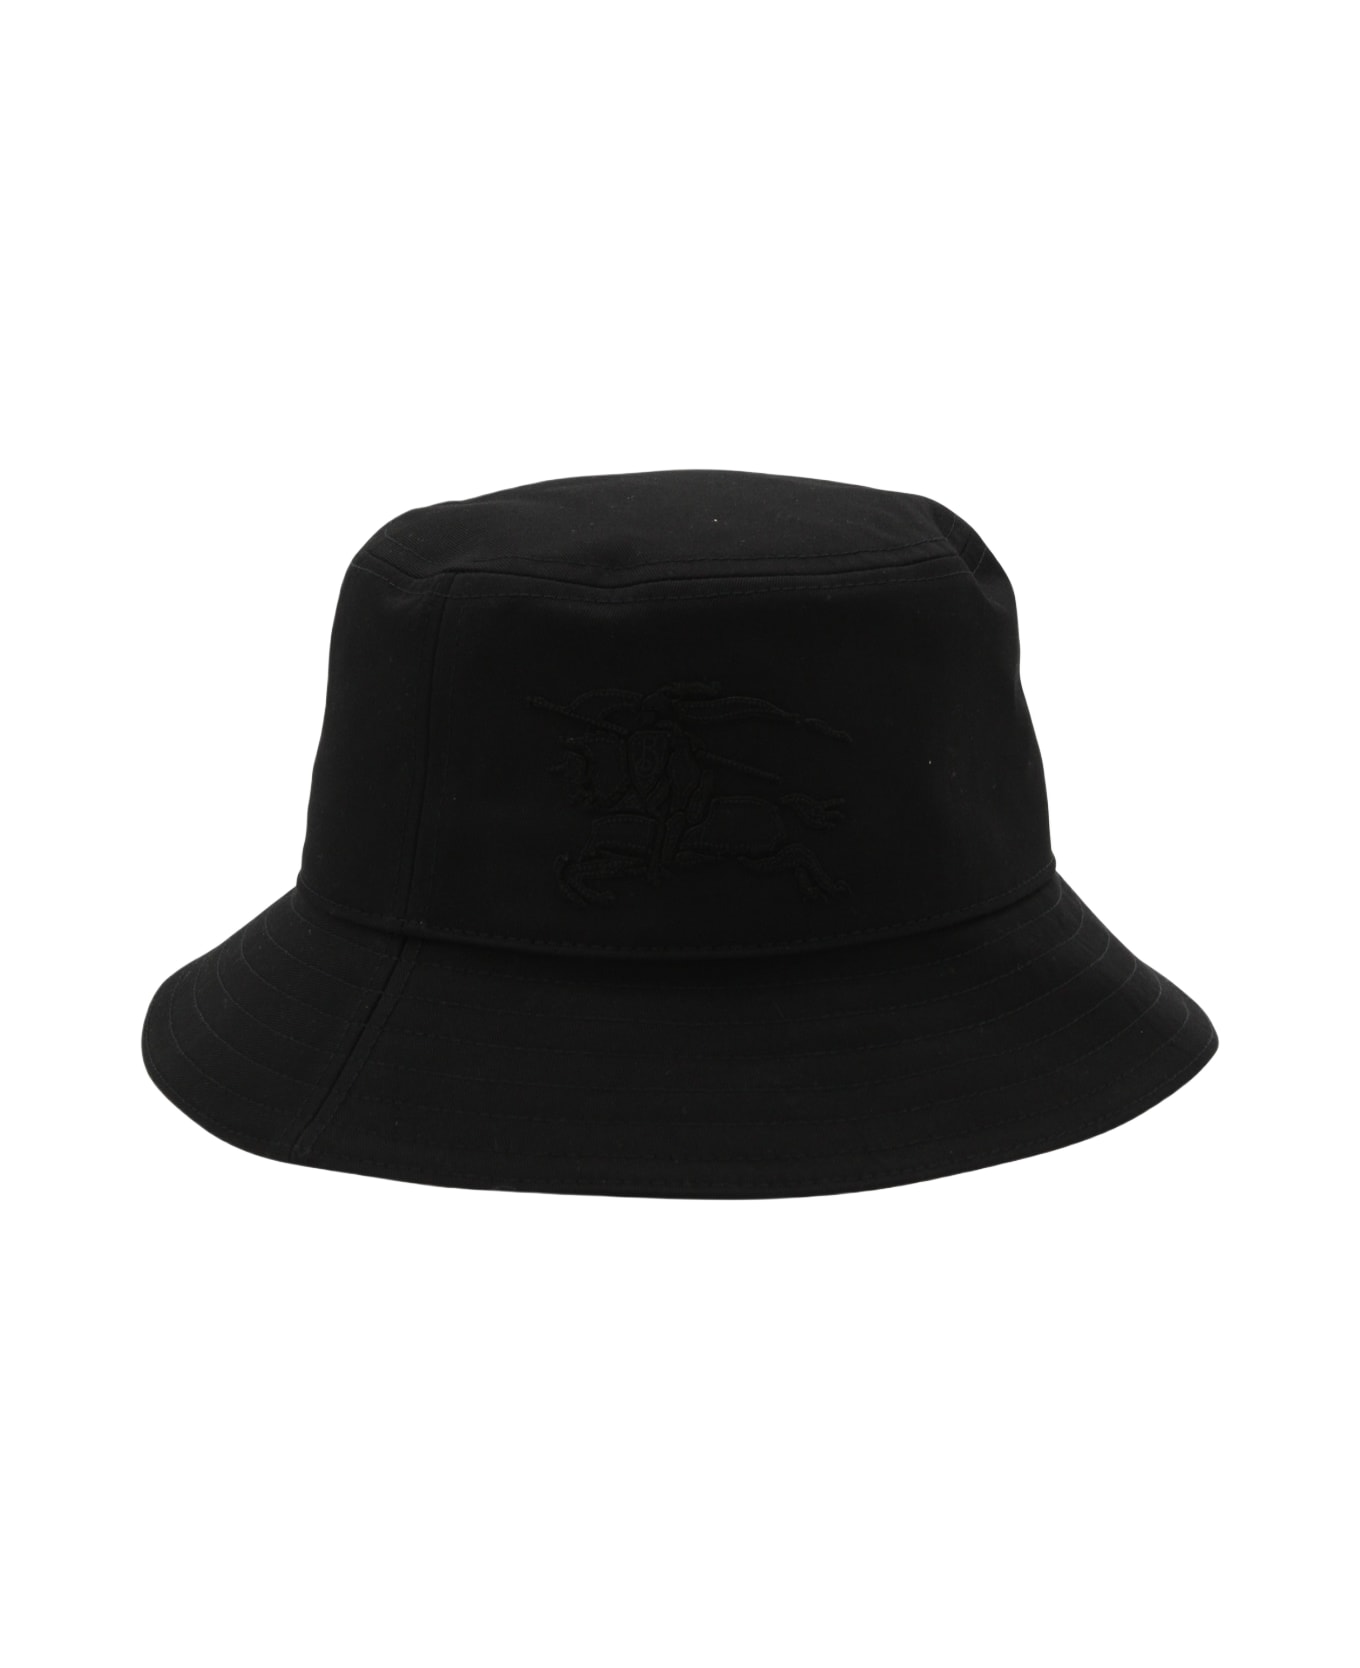 Burberry Black Cotton Blend Bucket Hat - Black 帽子